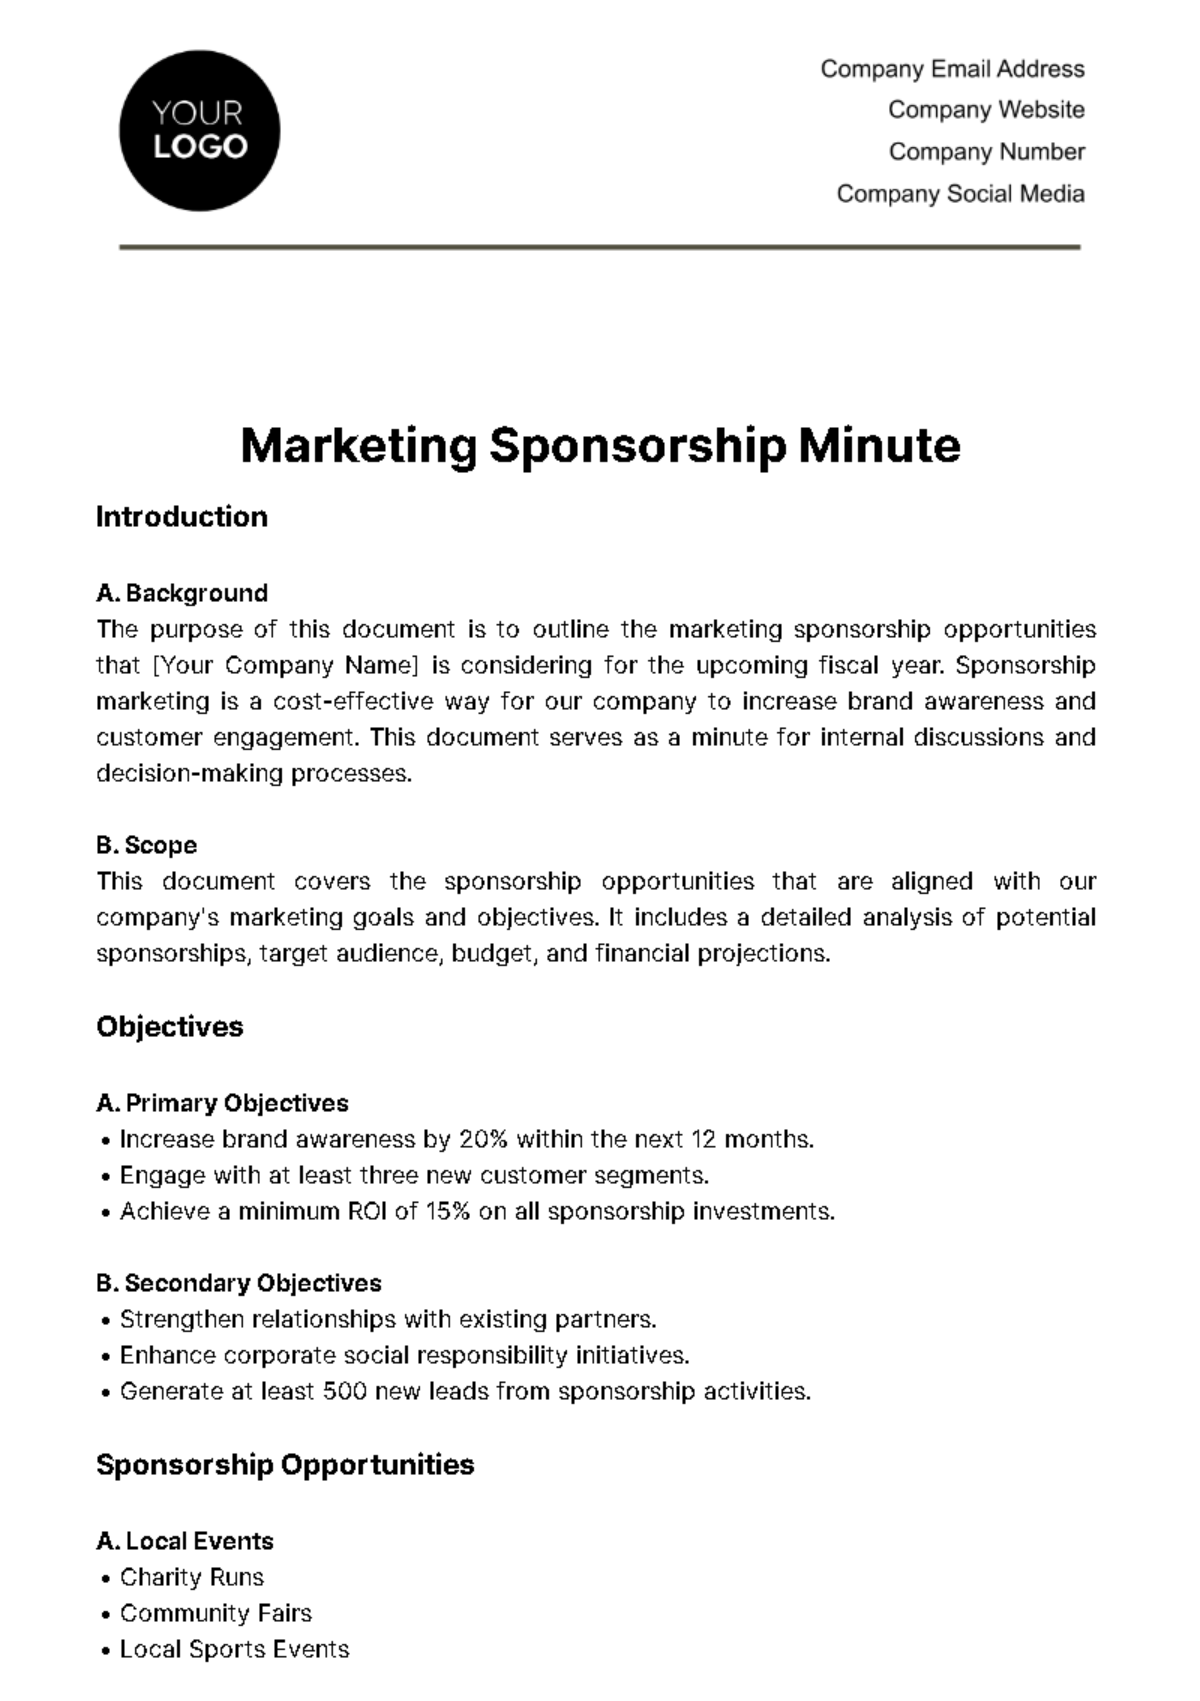 Free Marketing Sponsorship Minute Template